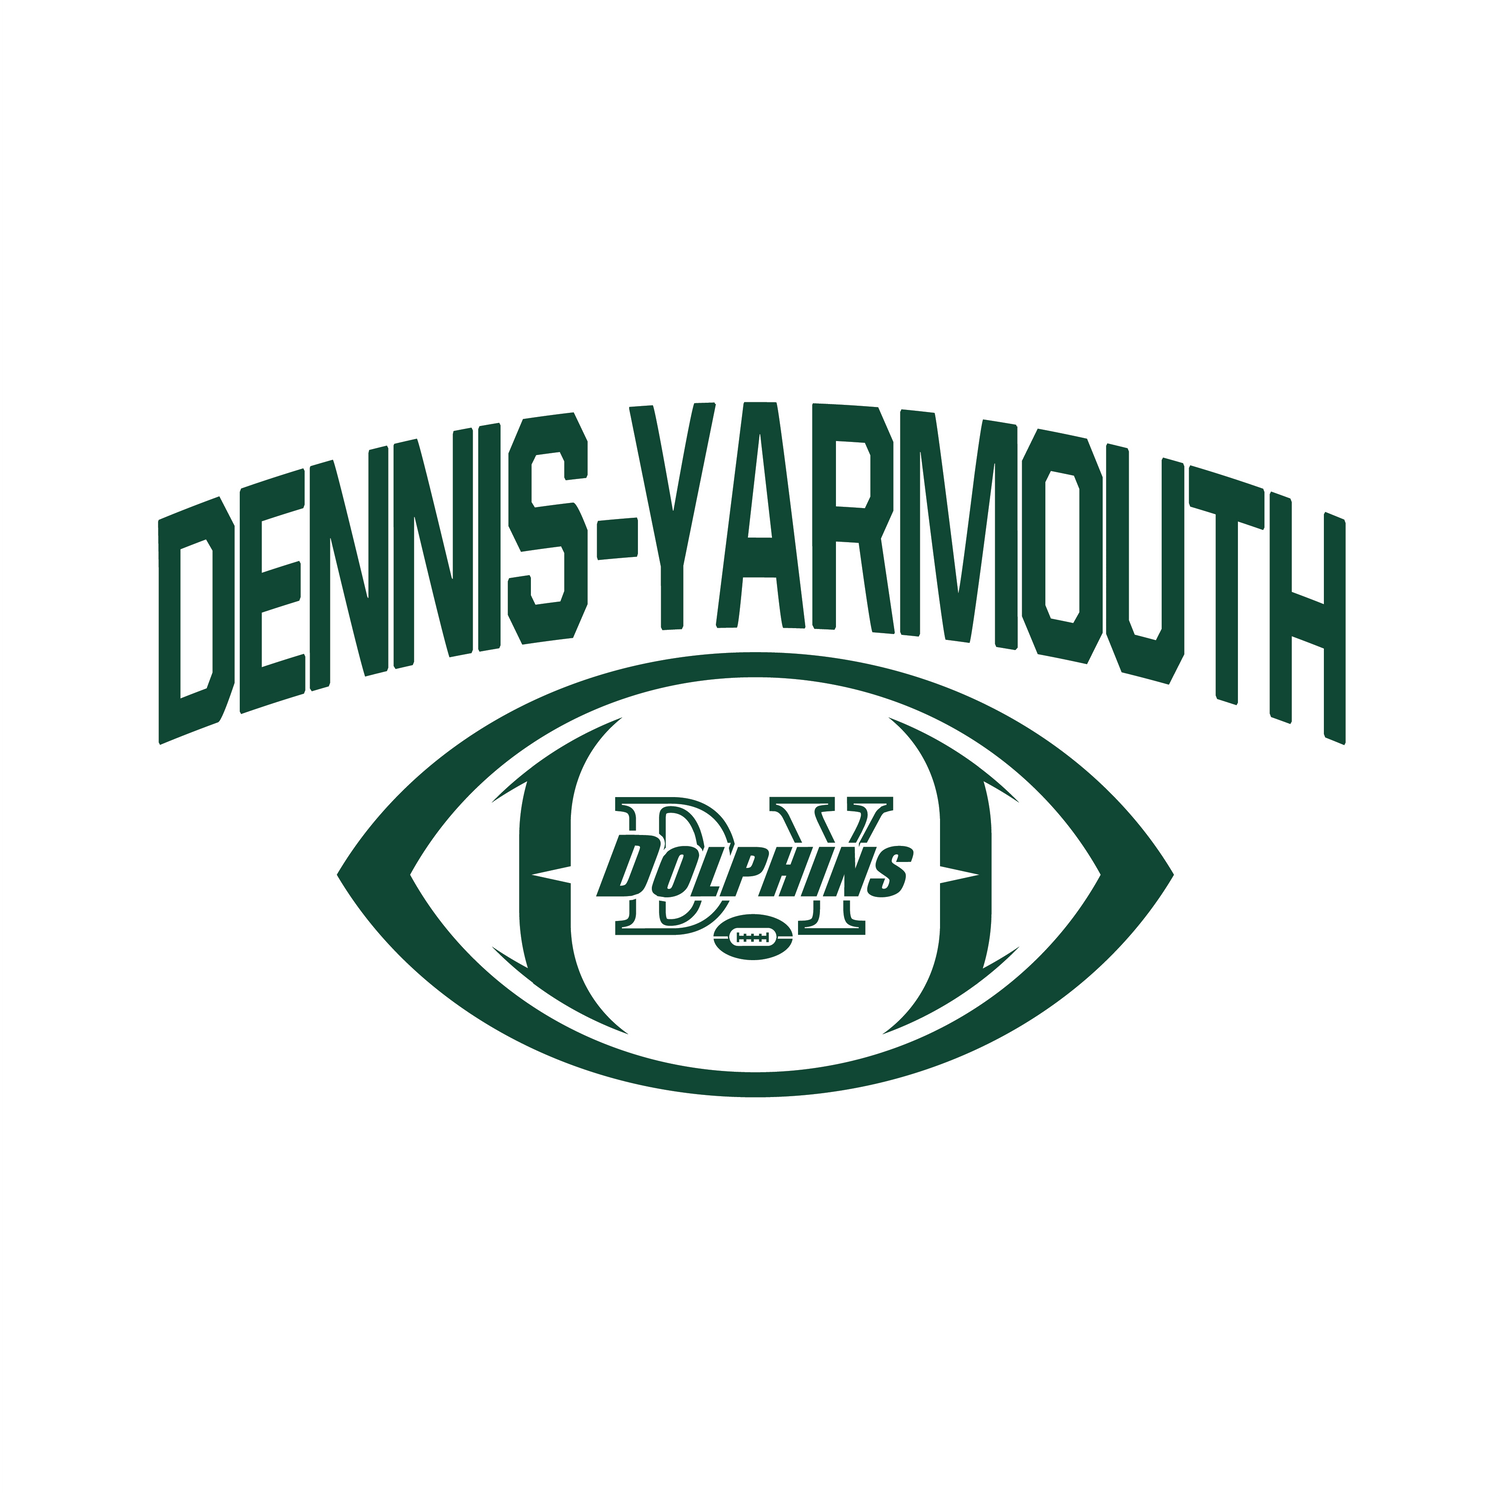 Dennis - Yarmouth Dolphins - Football